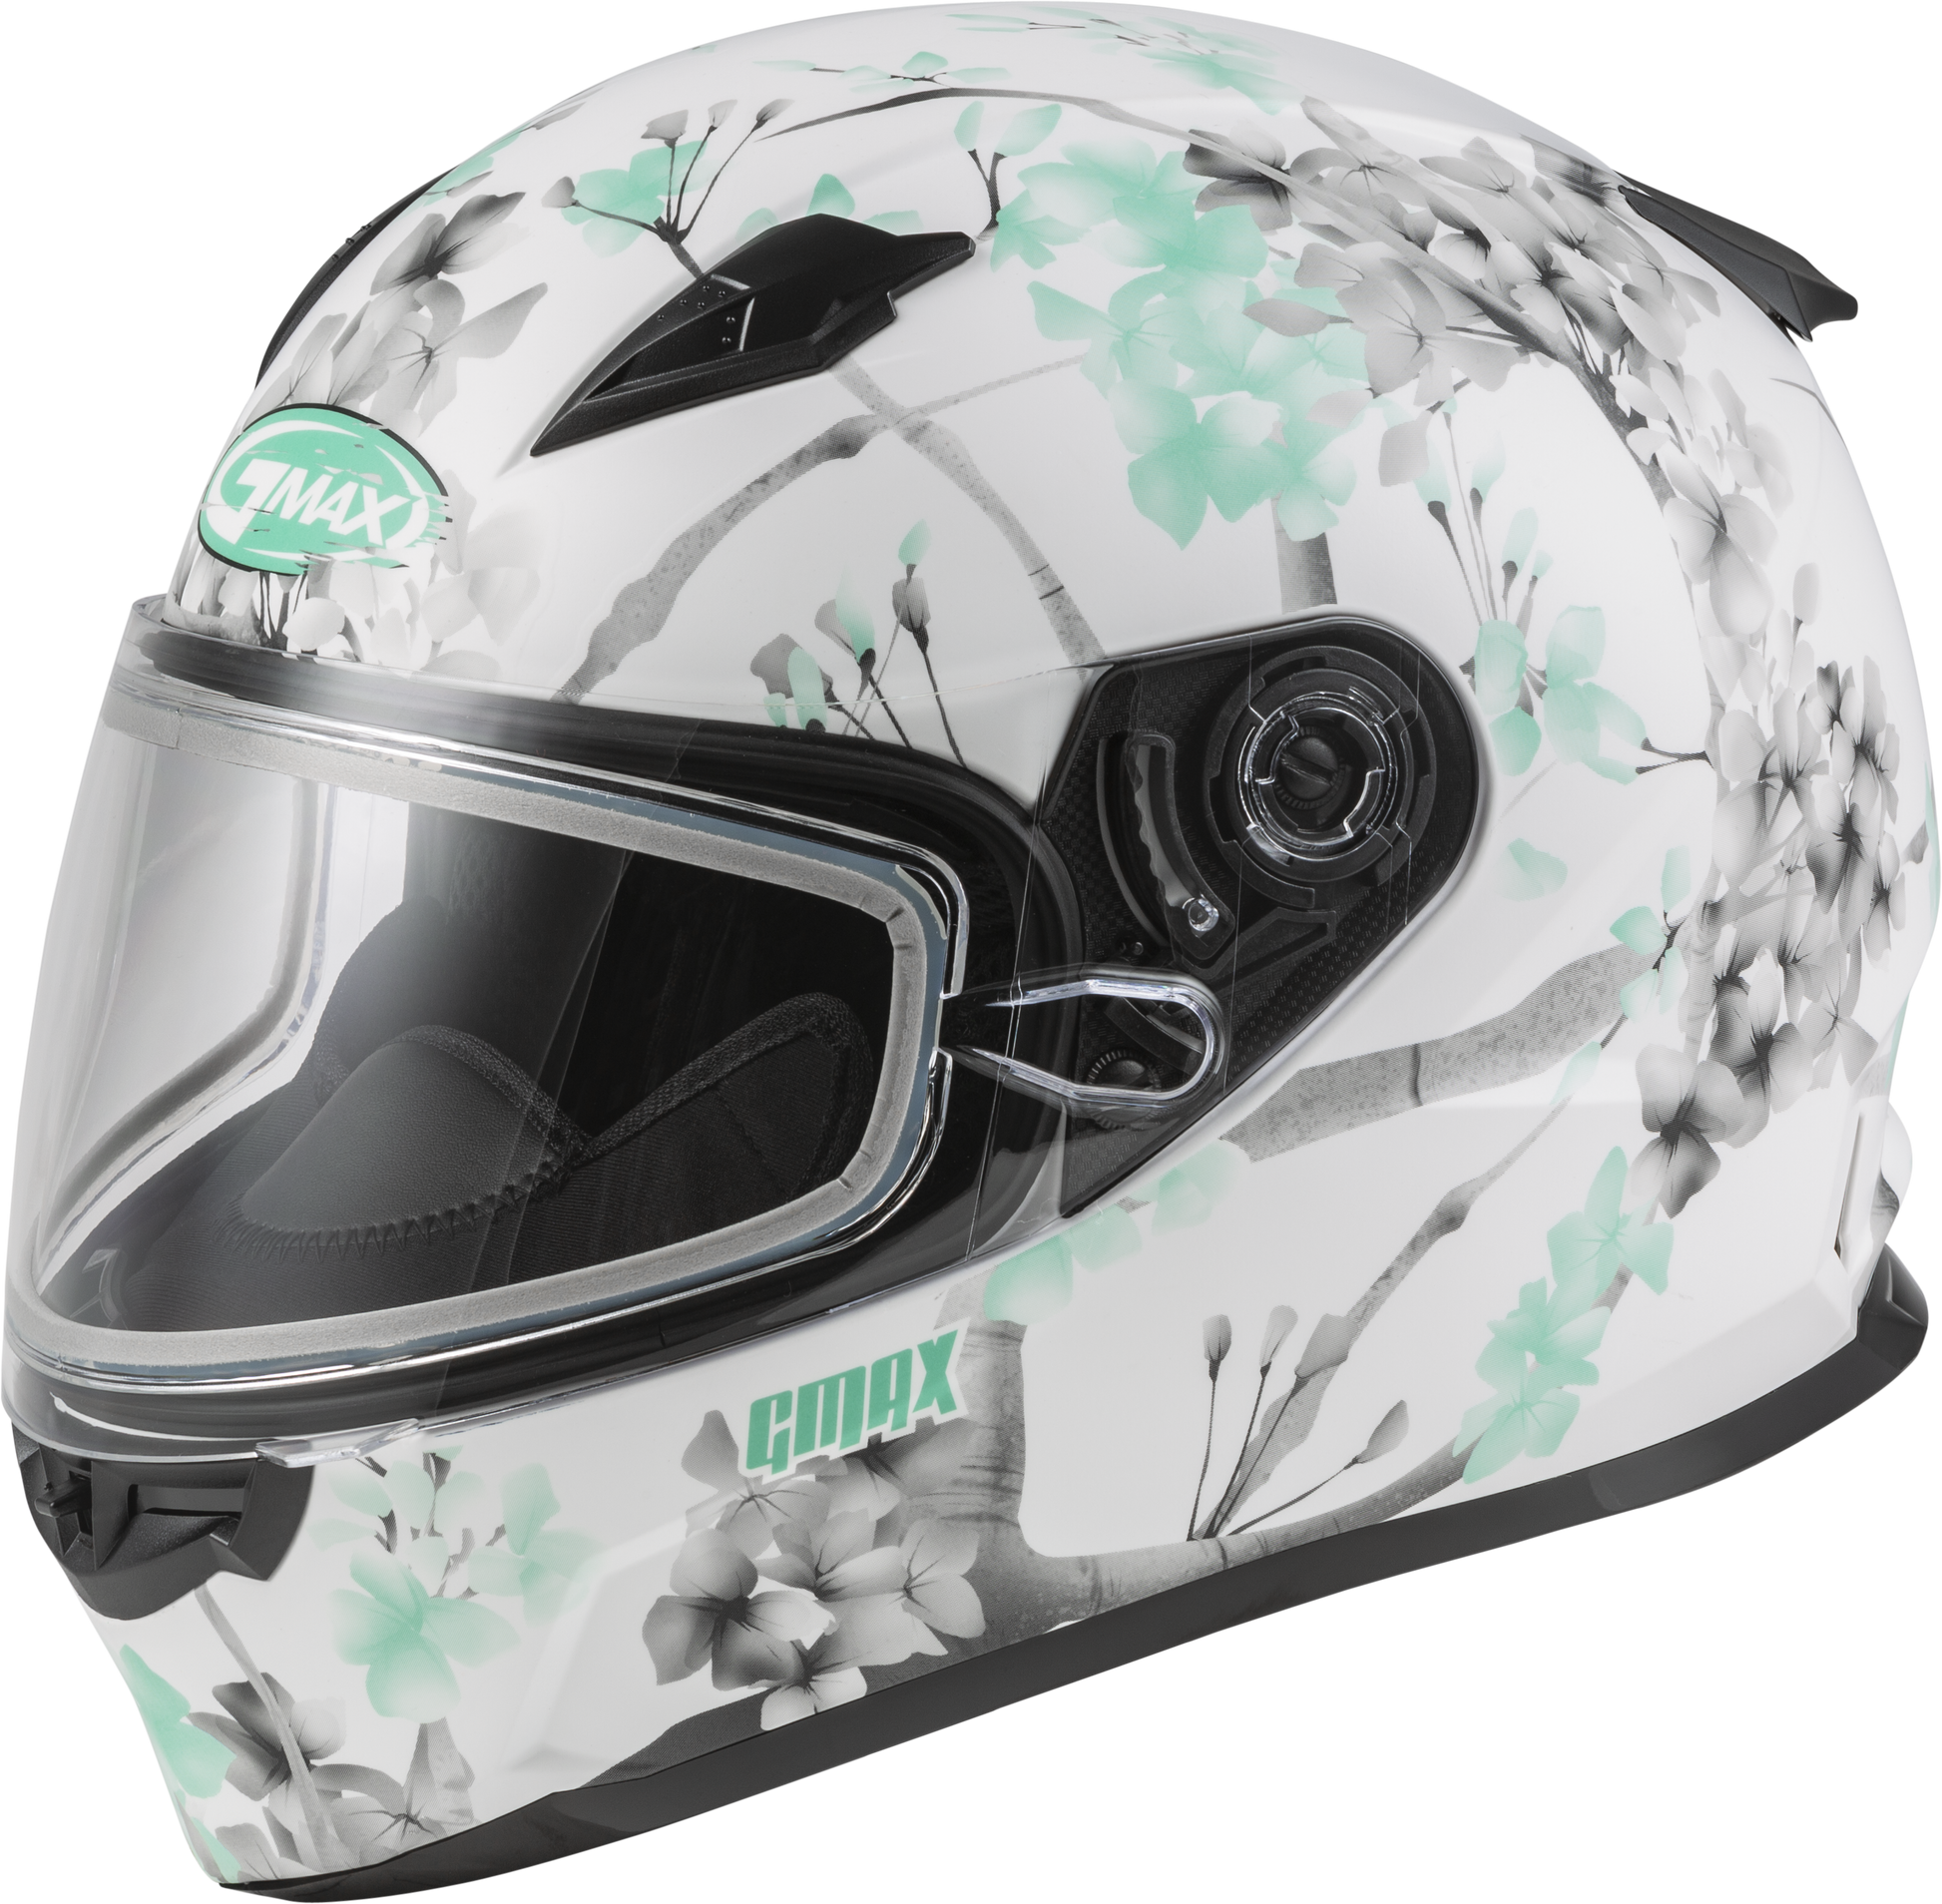 Gmax 72-6341 FF-49S 'Blossom' Full-Face Snow Helmet Matte Wht/Teal/Grey